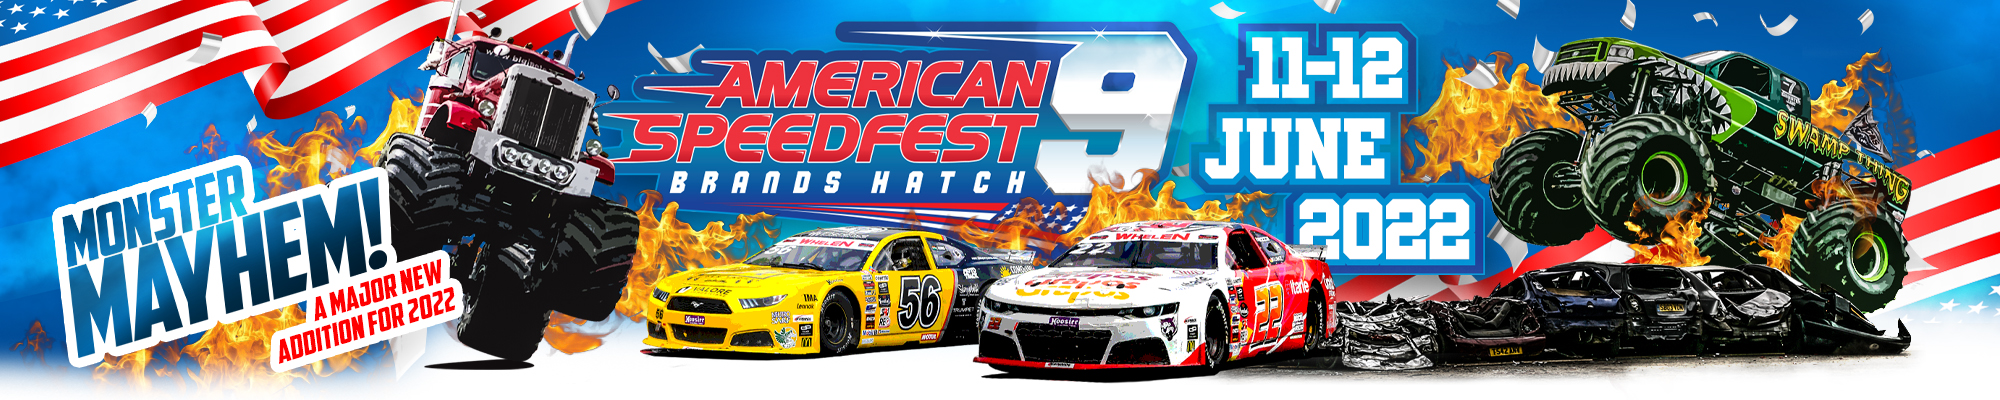 American SpeedFest 9